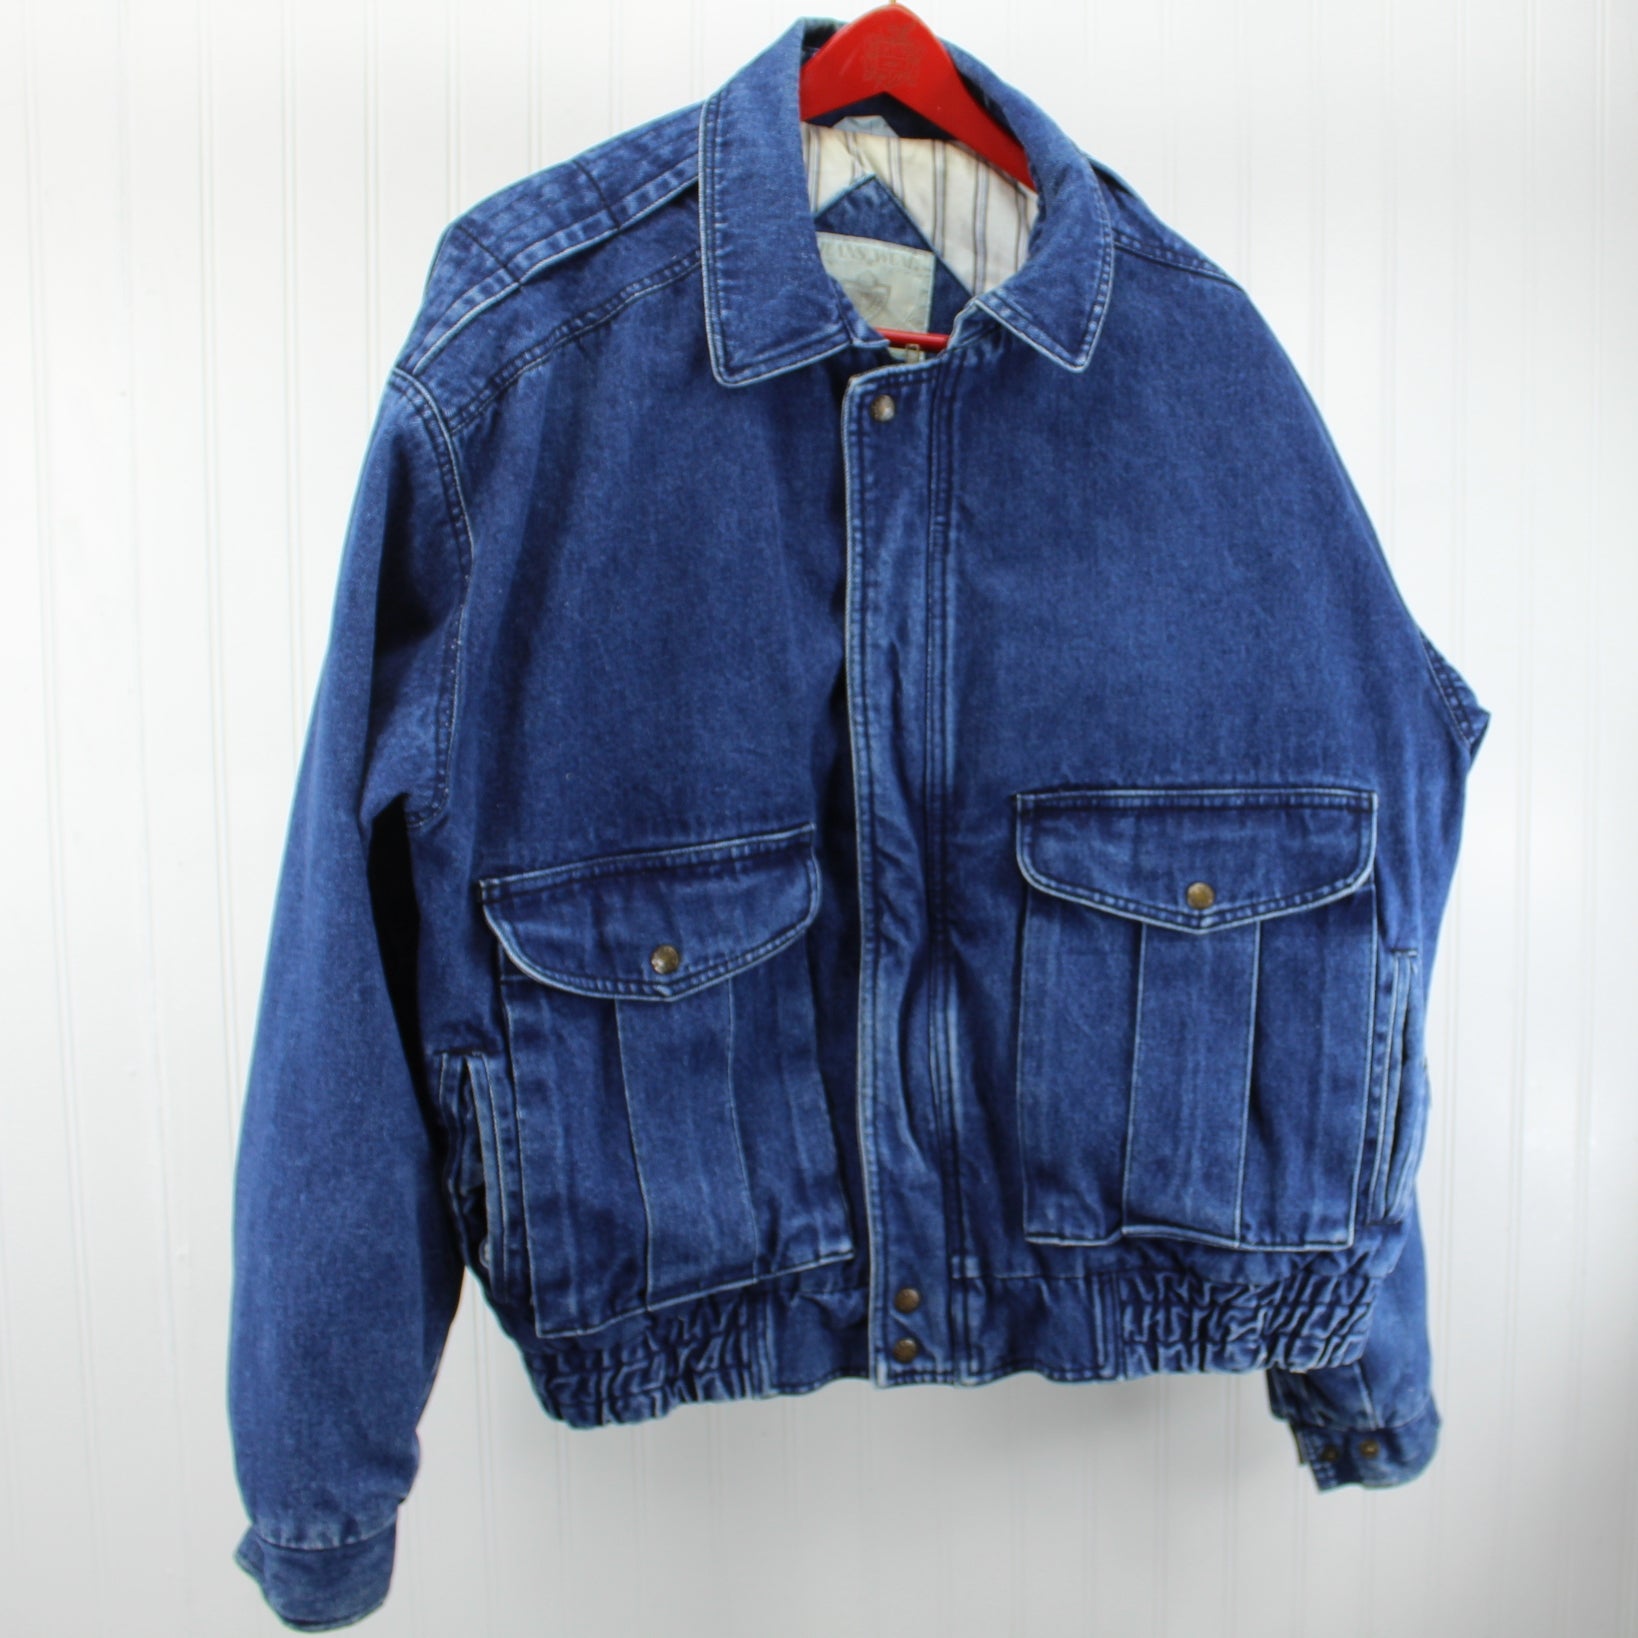 Jeans Wear Trent Blue Denim Cotton Jacket Lined Blue White Stripe Great Cut Size L